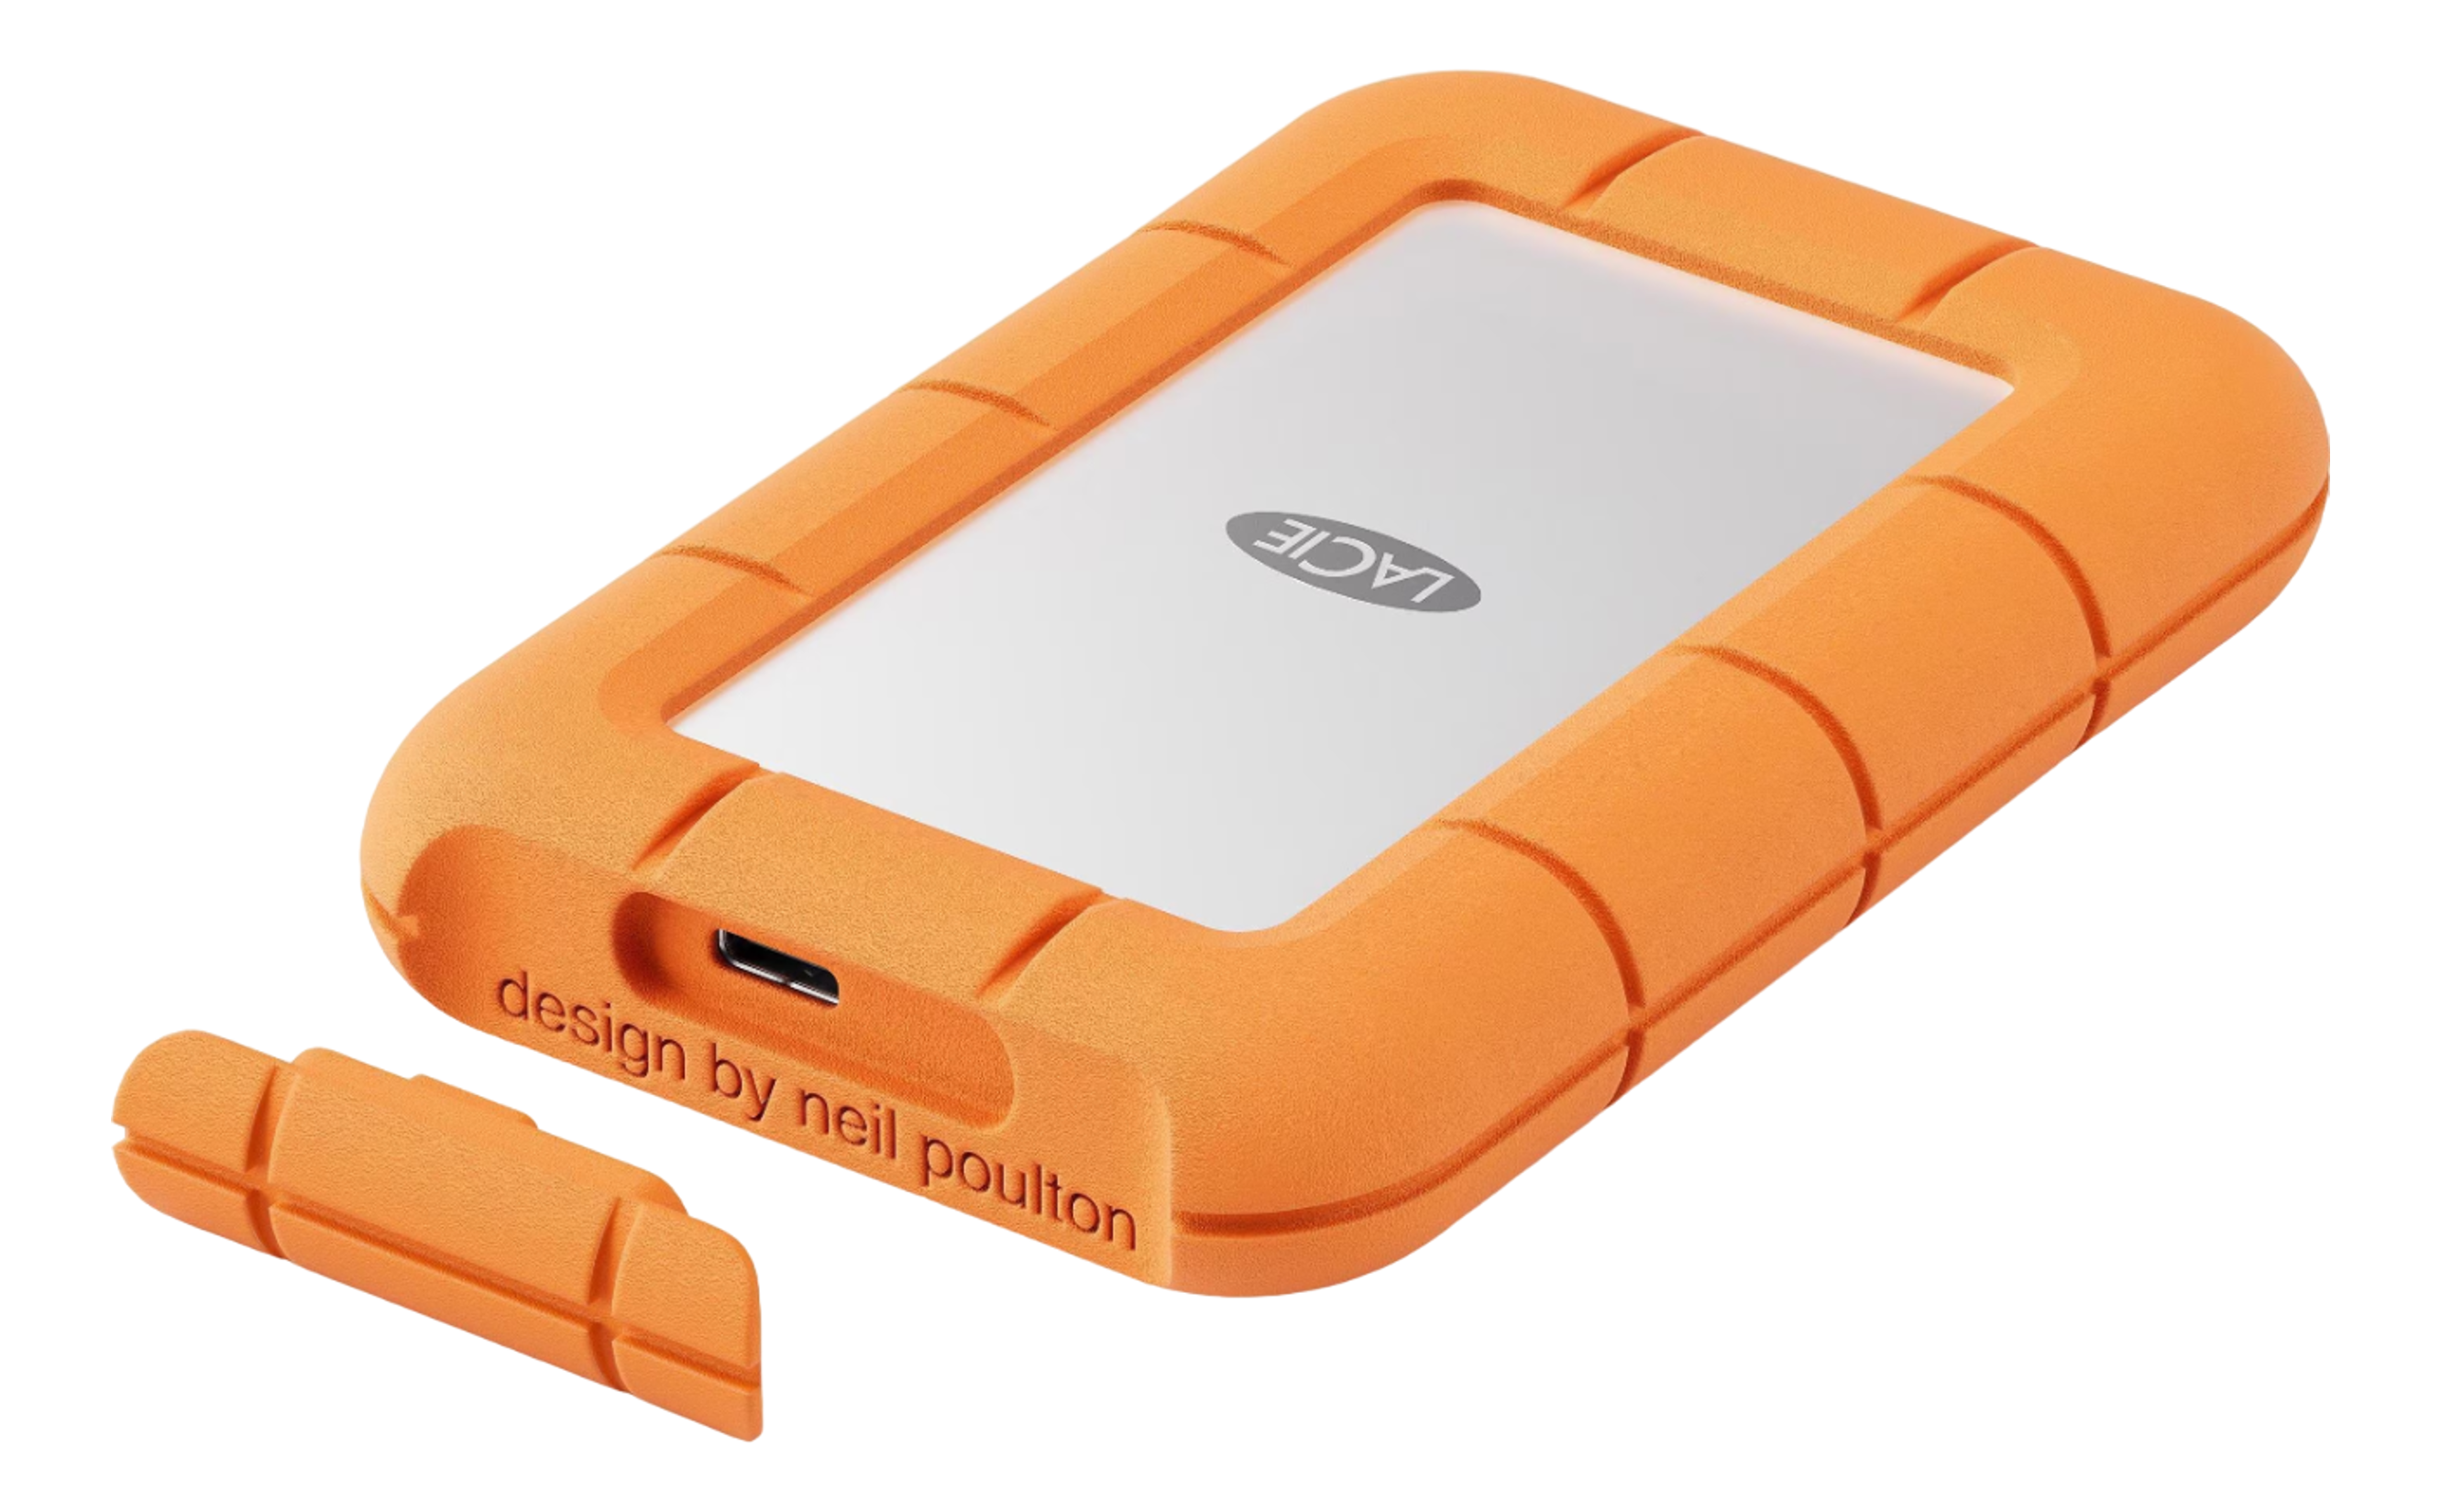 LACIE Rugged Mini - Disque dur (SSD, 500 Go, orange/argent)